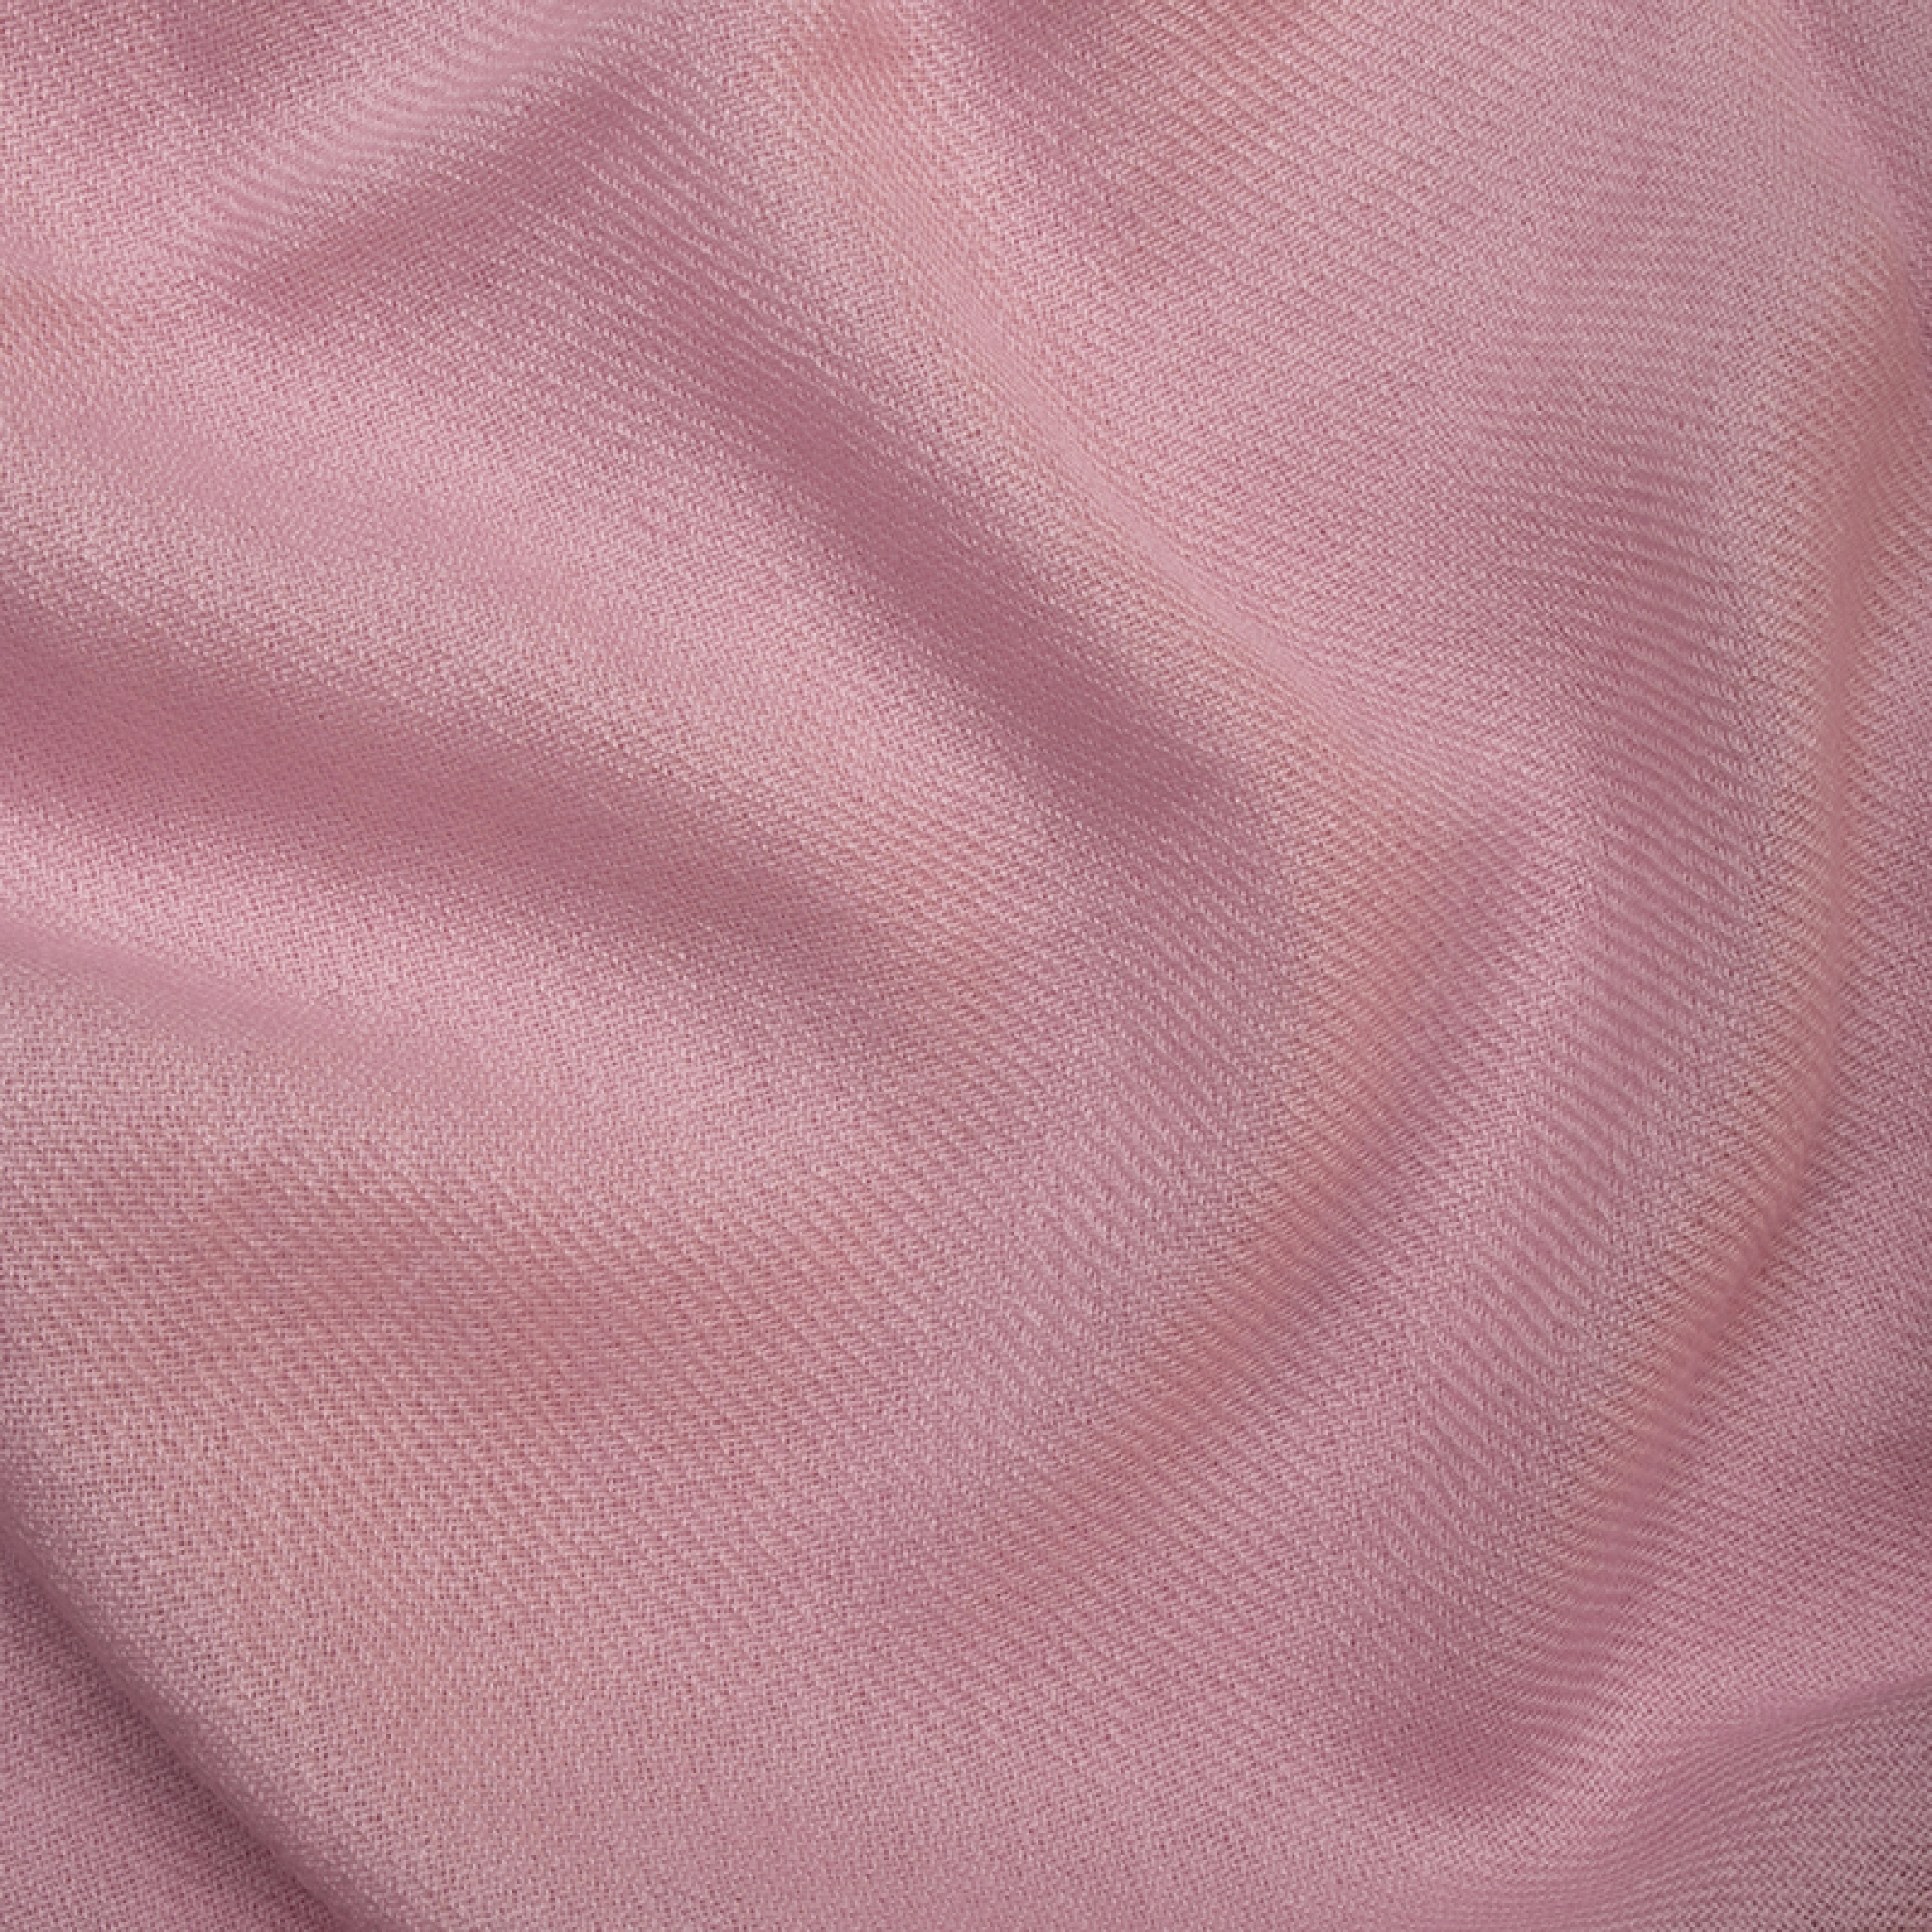 Cashmere accessori cocooning frisbi 147 x 203 rosa pallido 147 x 203 cm